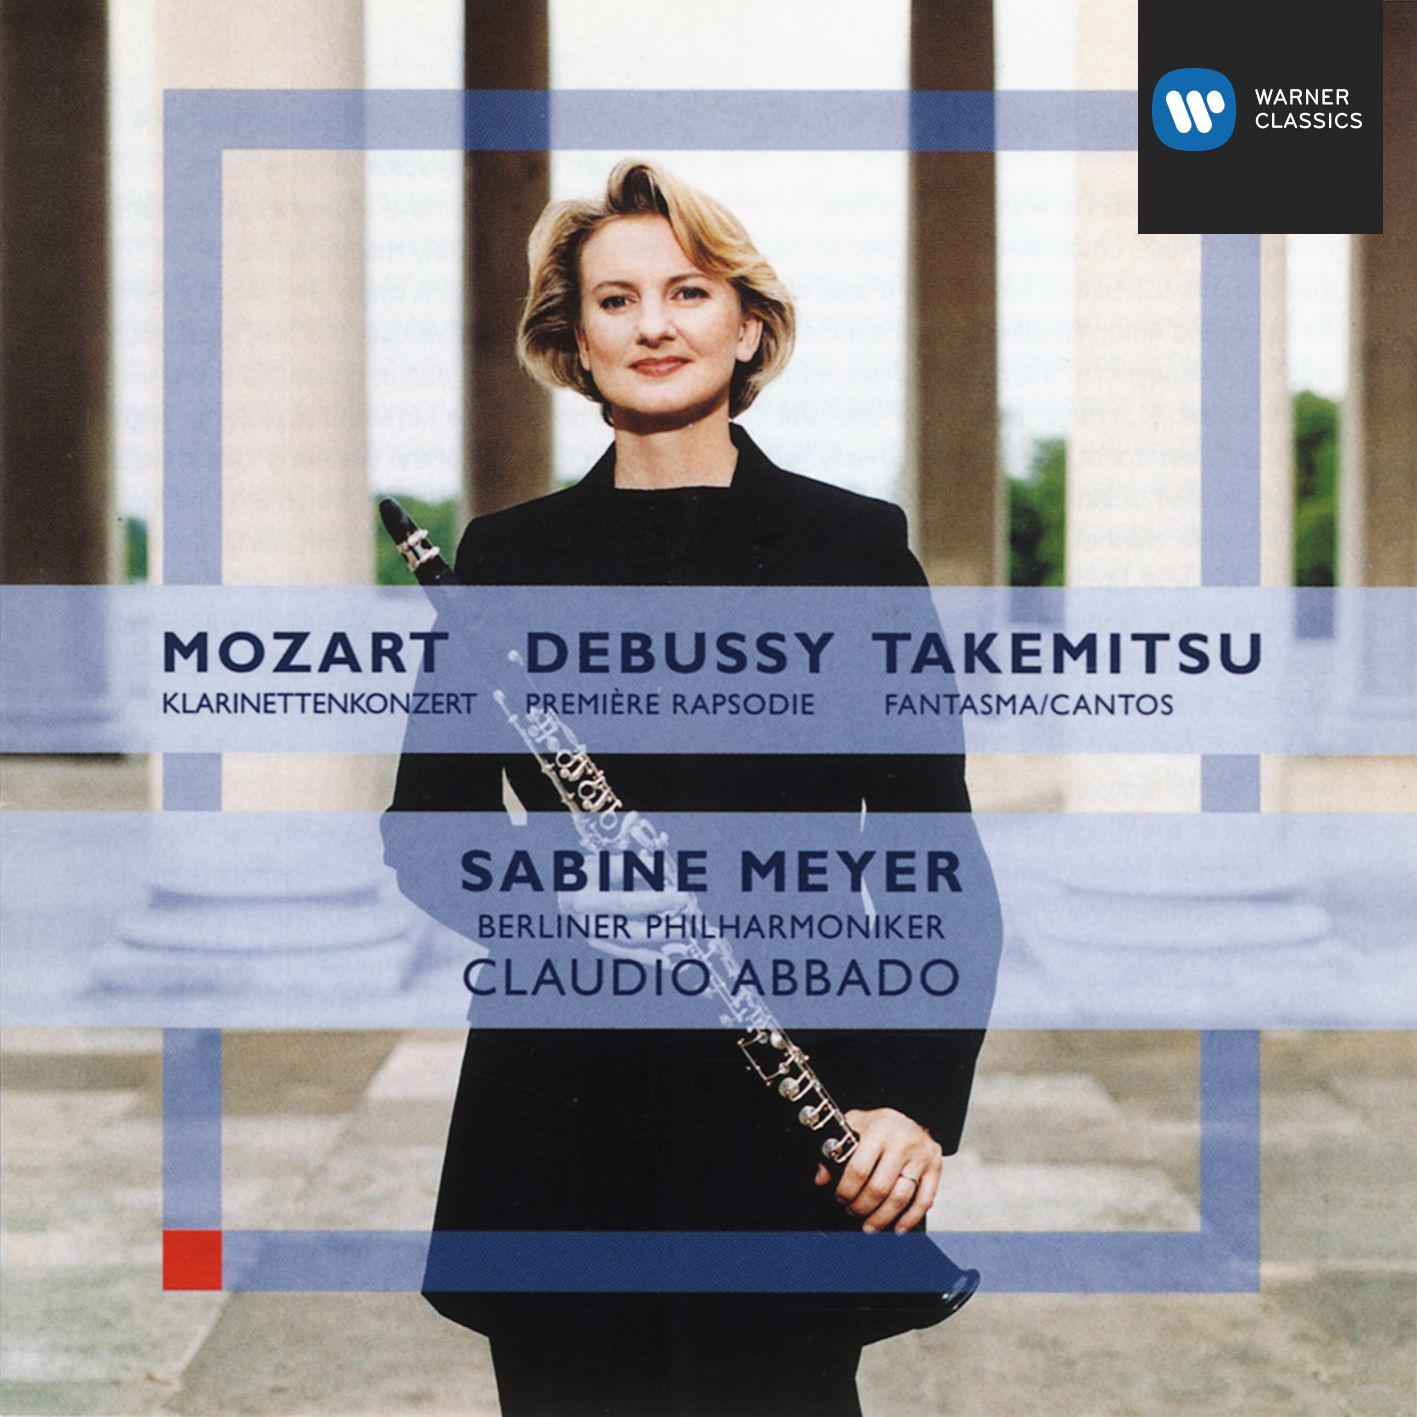 Mozart: Clarinet Concerto Debussy: Premie re Rhapsodie Takemitsu: Fantasma Cantos